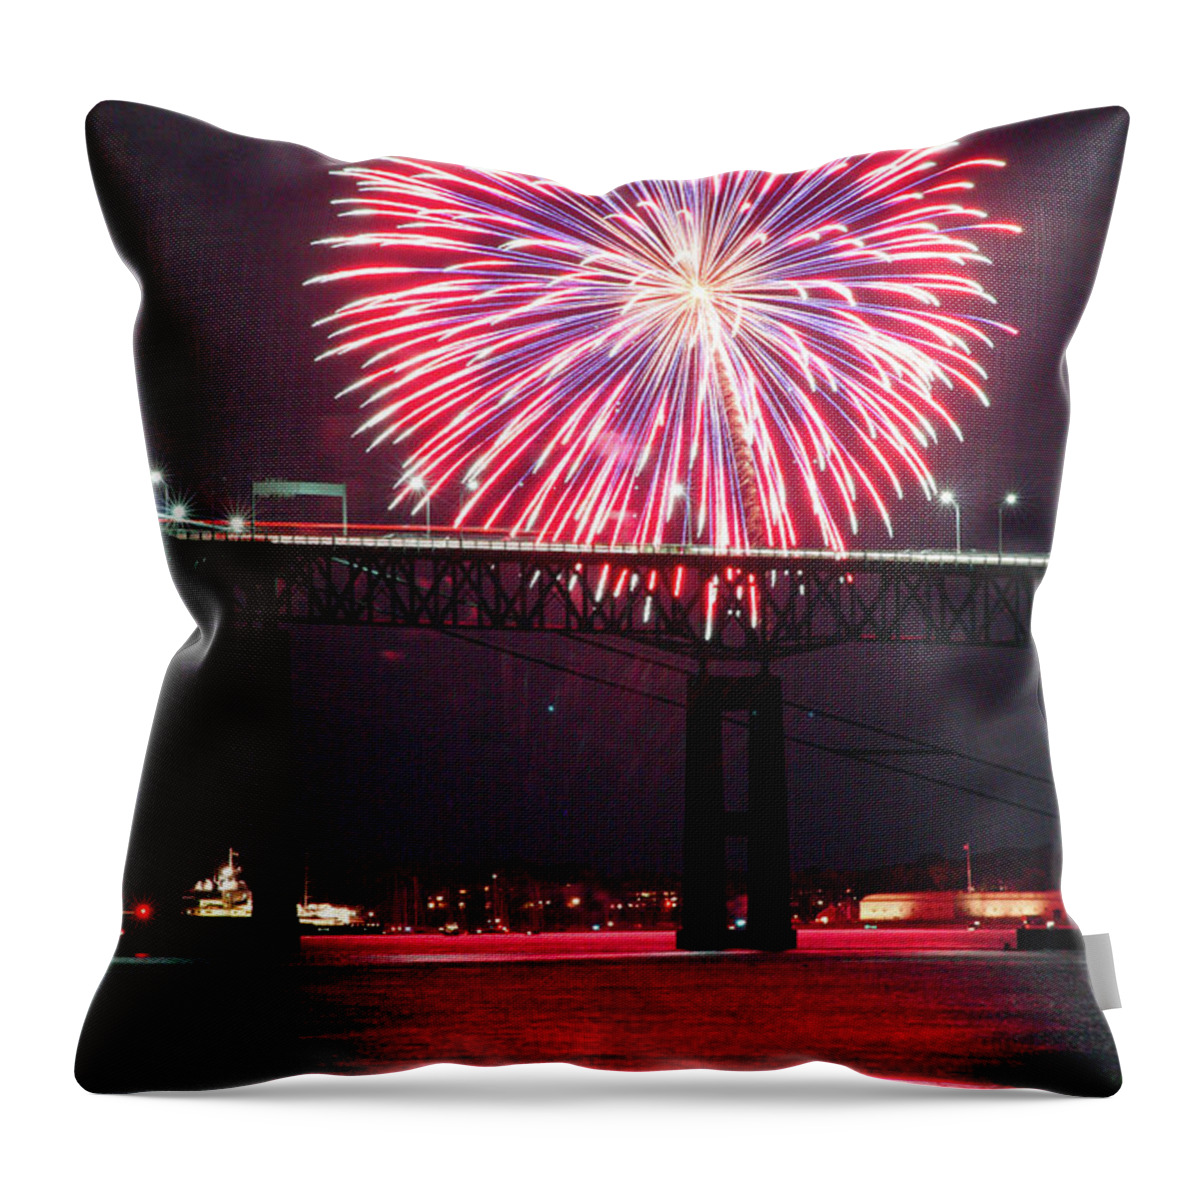 Fireworks Throw Pillow featuring the photograph Fireworks over the Newport Bridge by Jim Feldman